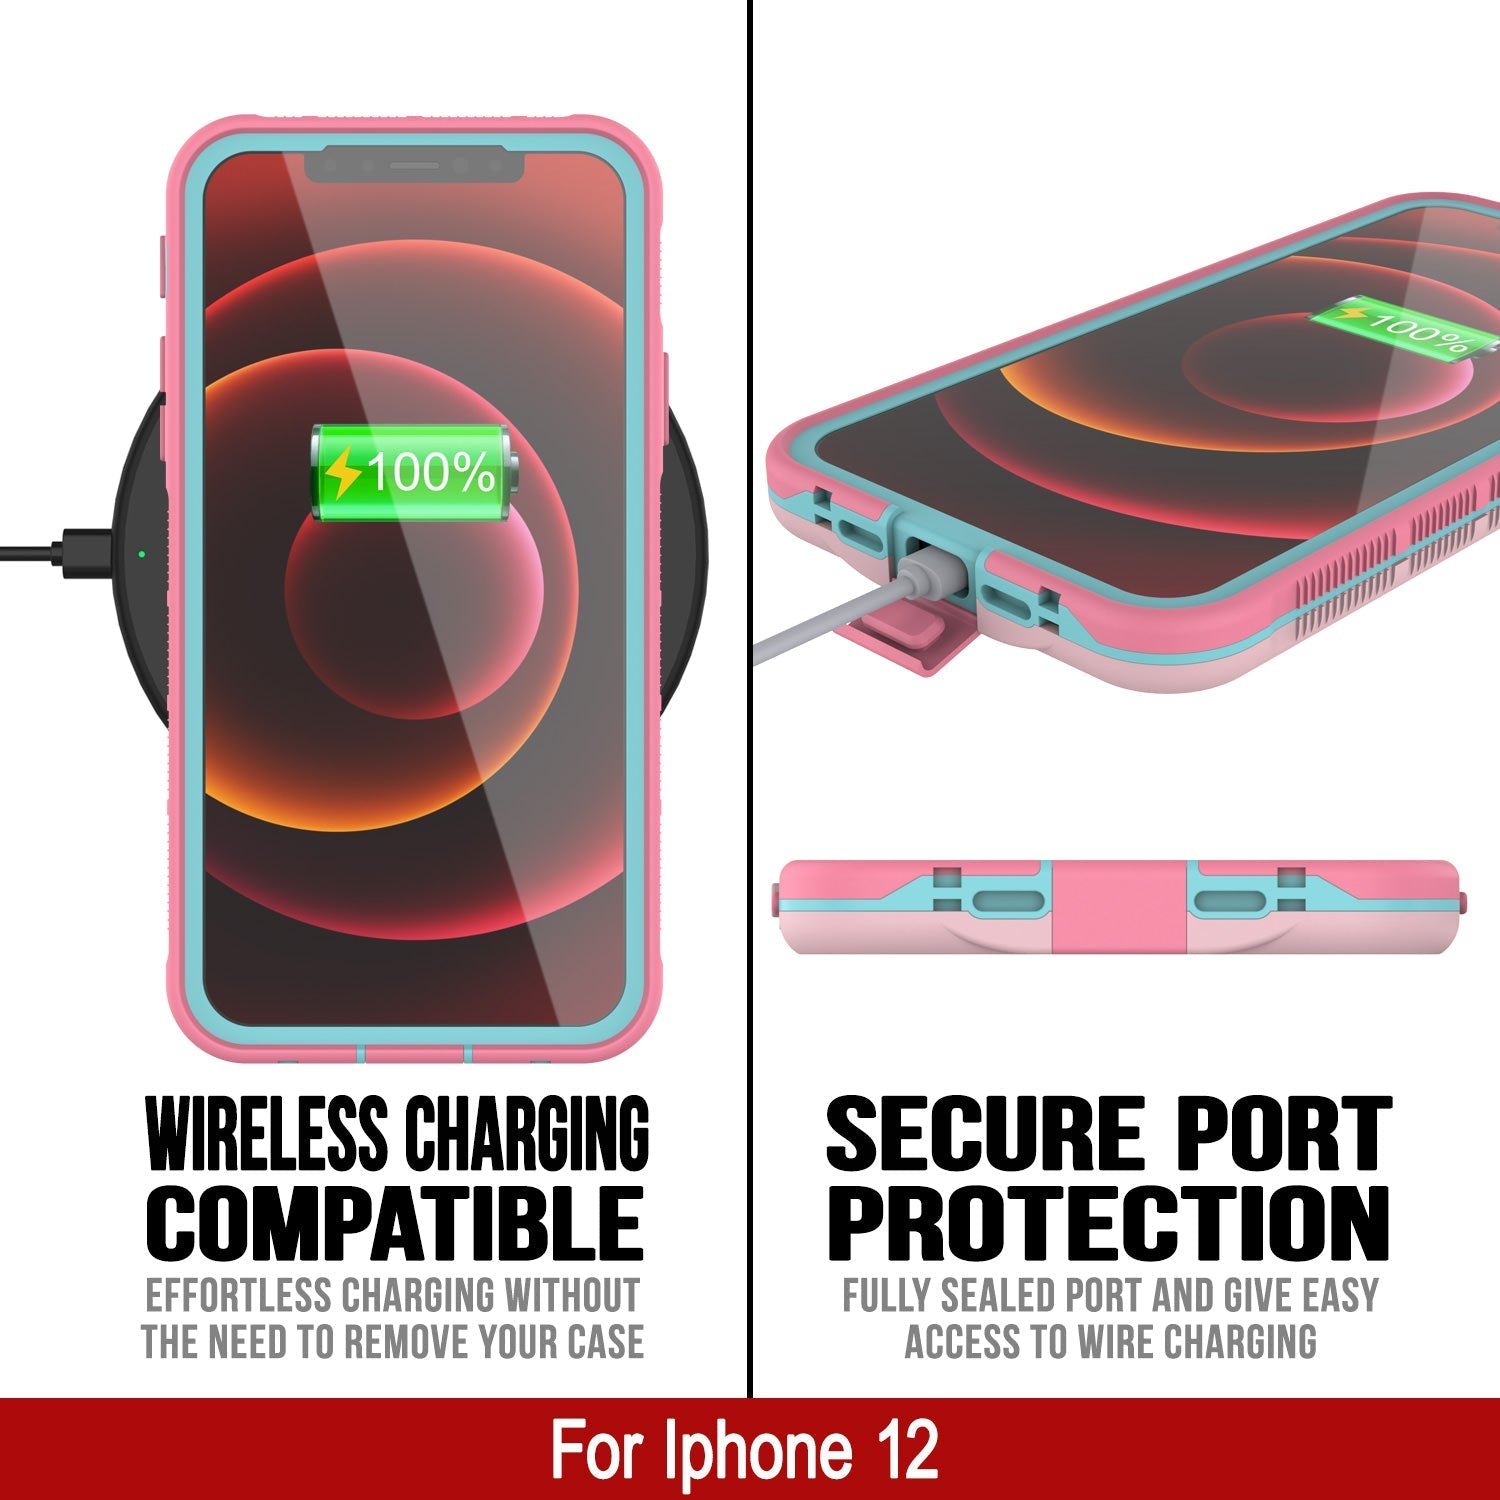 Punkcase iPhone 13 Waterproof Case [Aqua Series] Armor Cover [Pink]